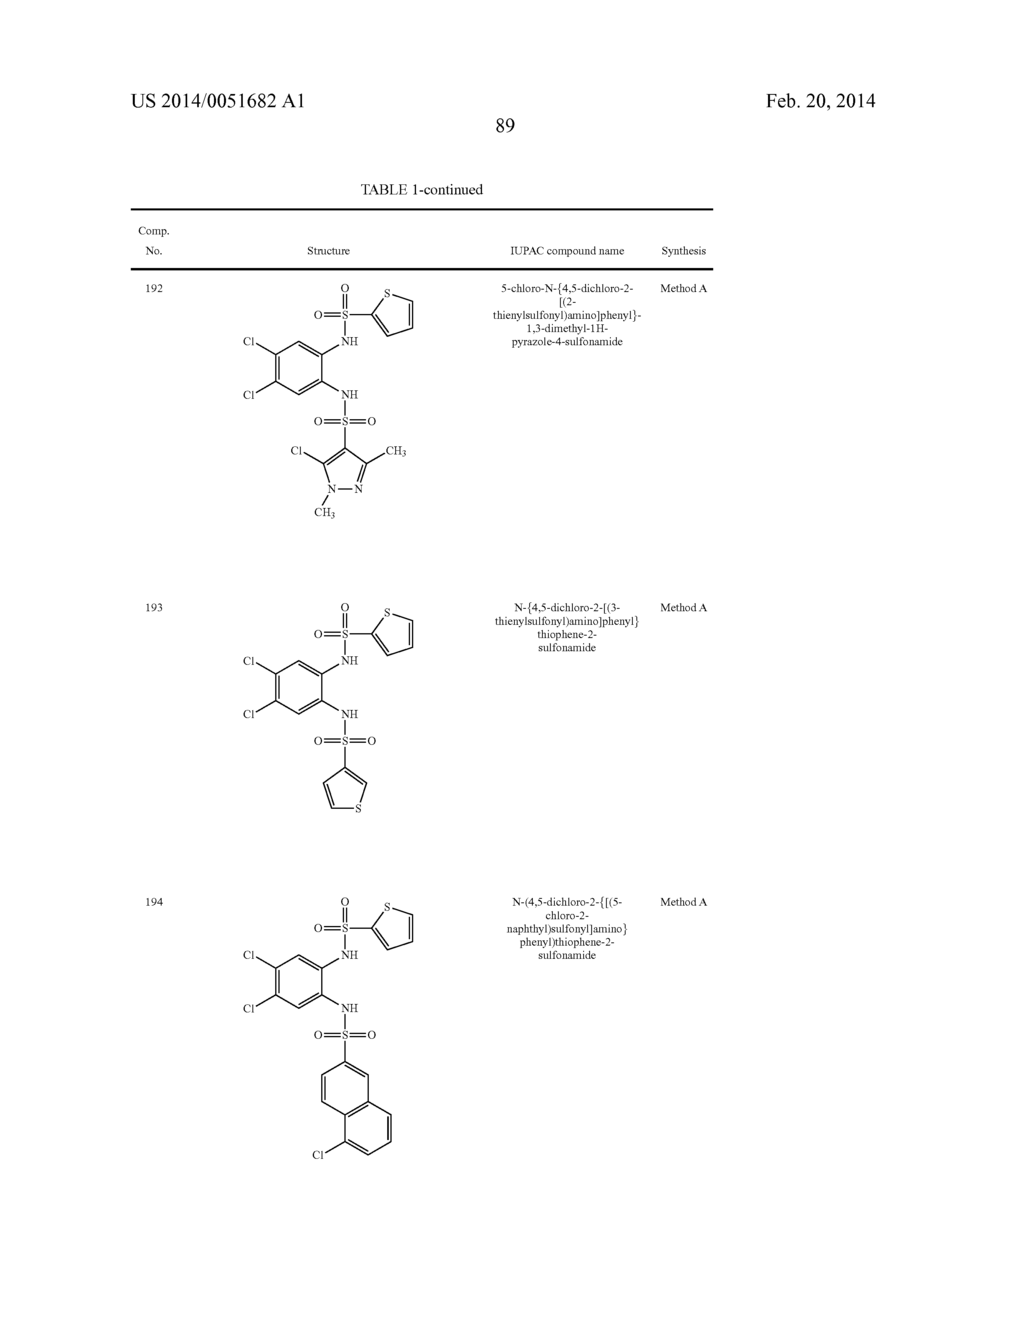 NOVEL 1,2- BIS-SULFONAMIDE DERIVATIVES AS CHEMOKINE RECEPTOR MODULATORS - diagram, schematic, and image 90